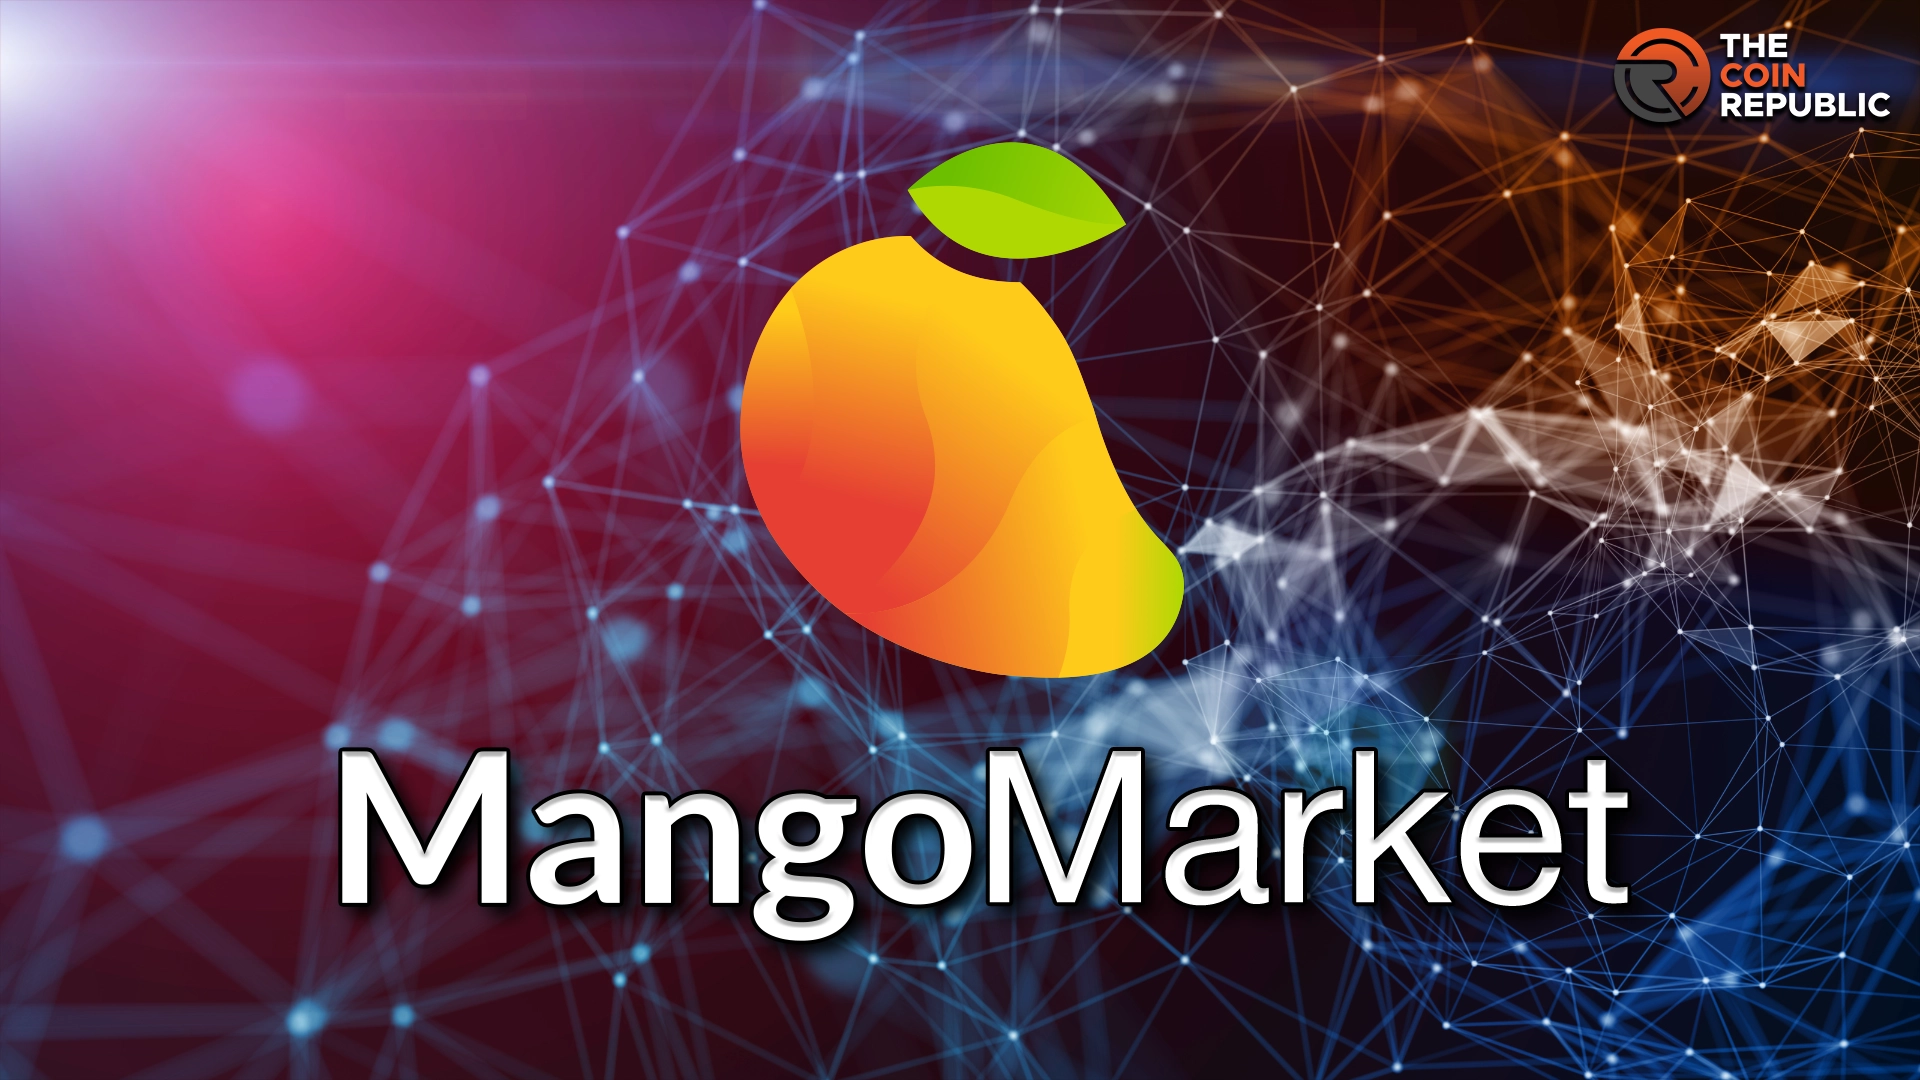 Mango Markets Exploiter Faces Child Pornography Charges